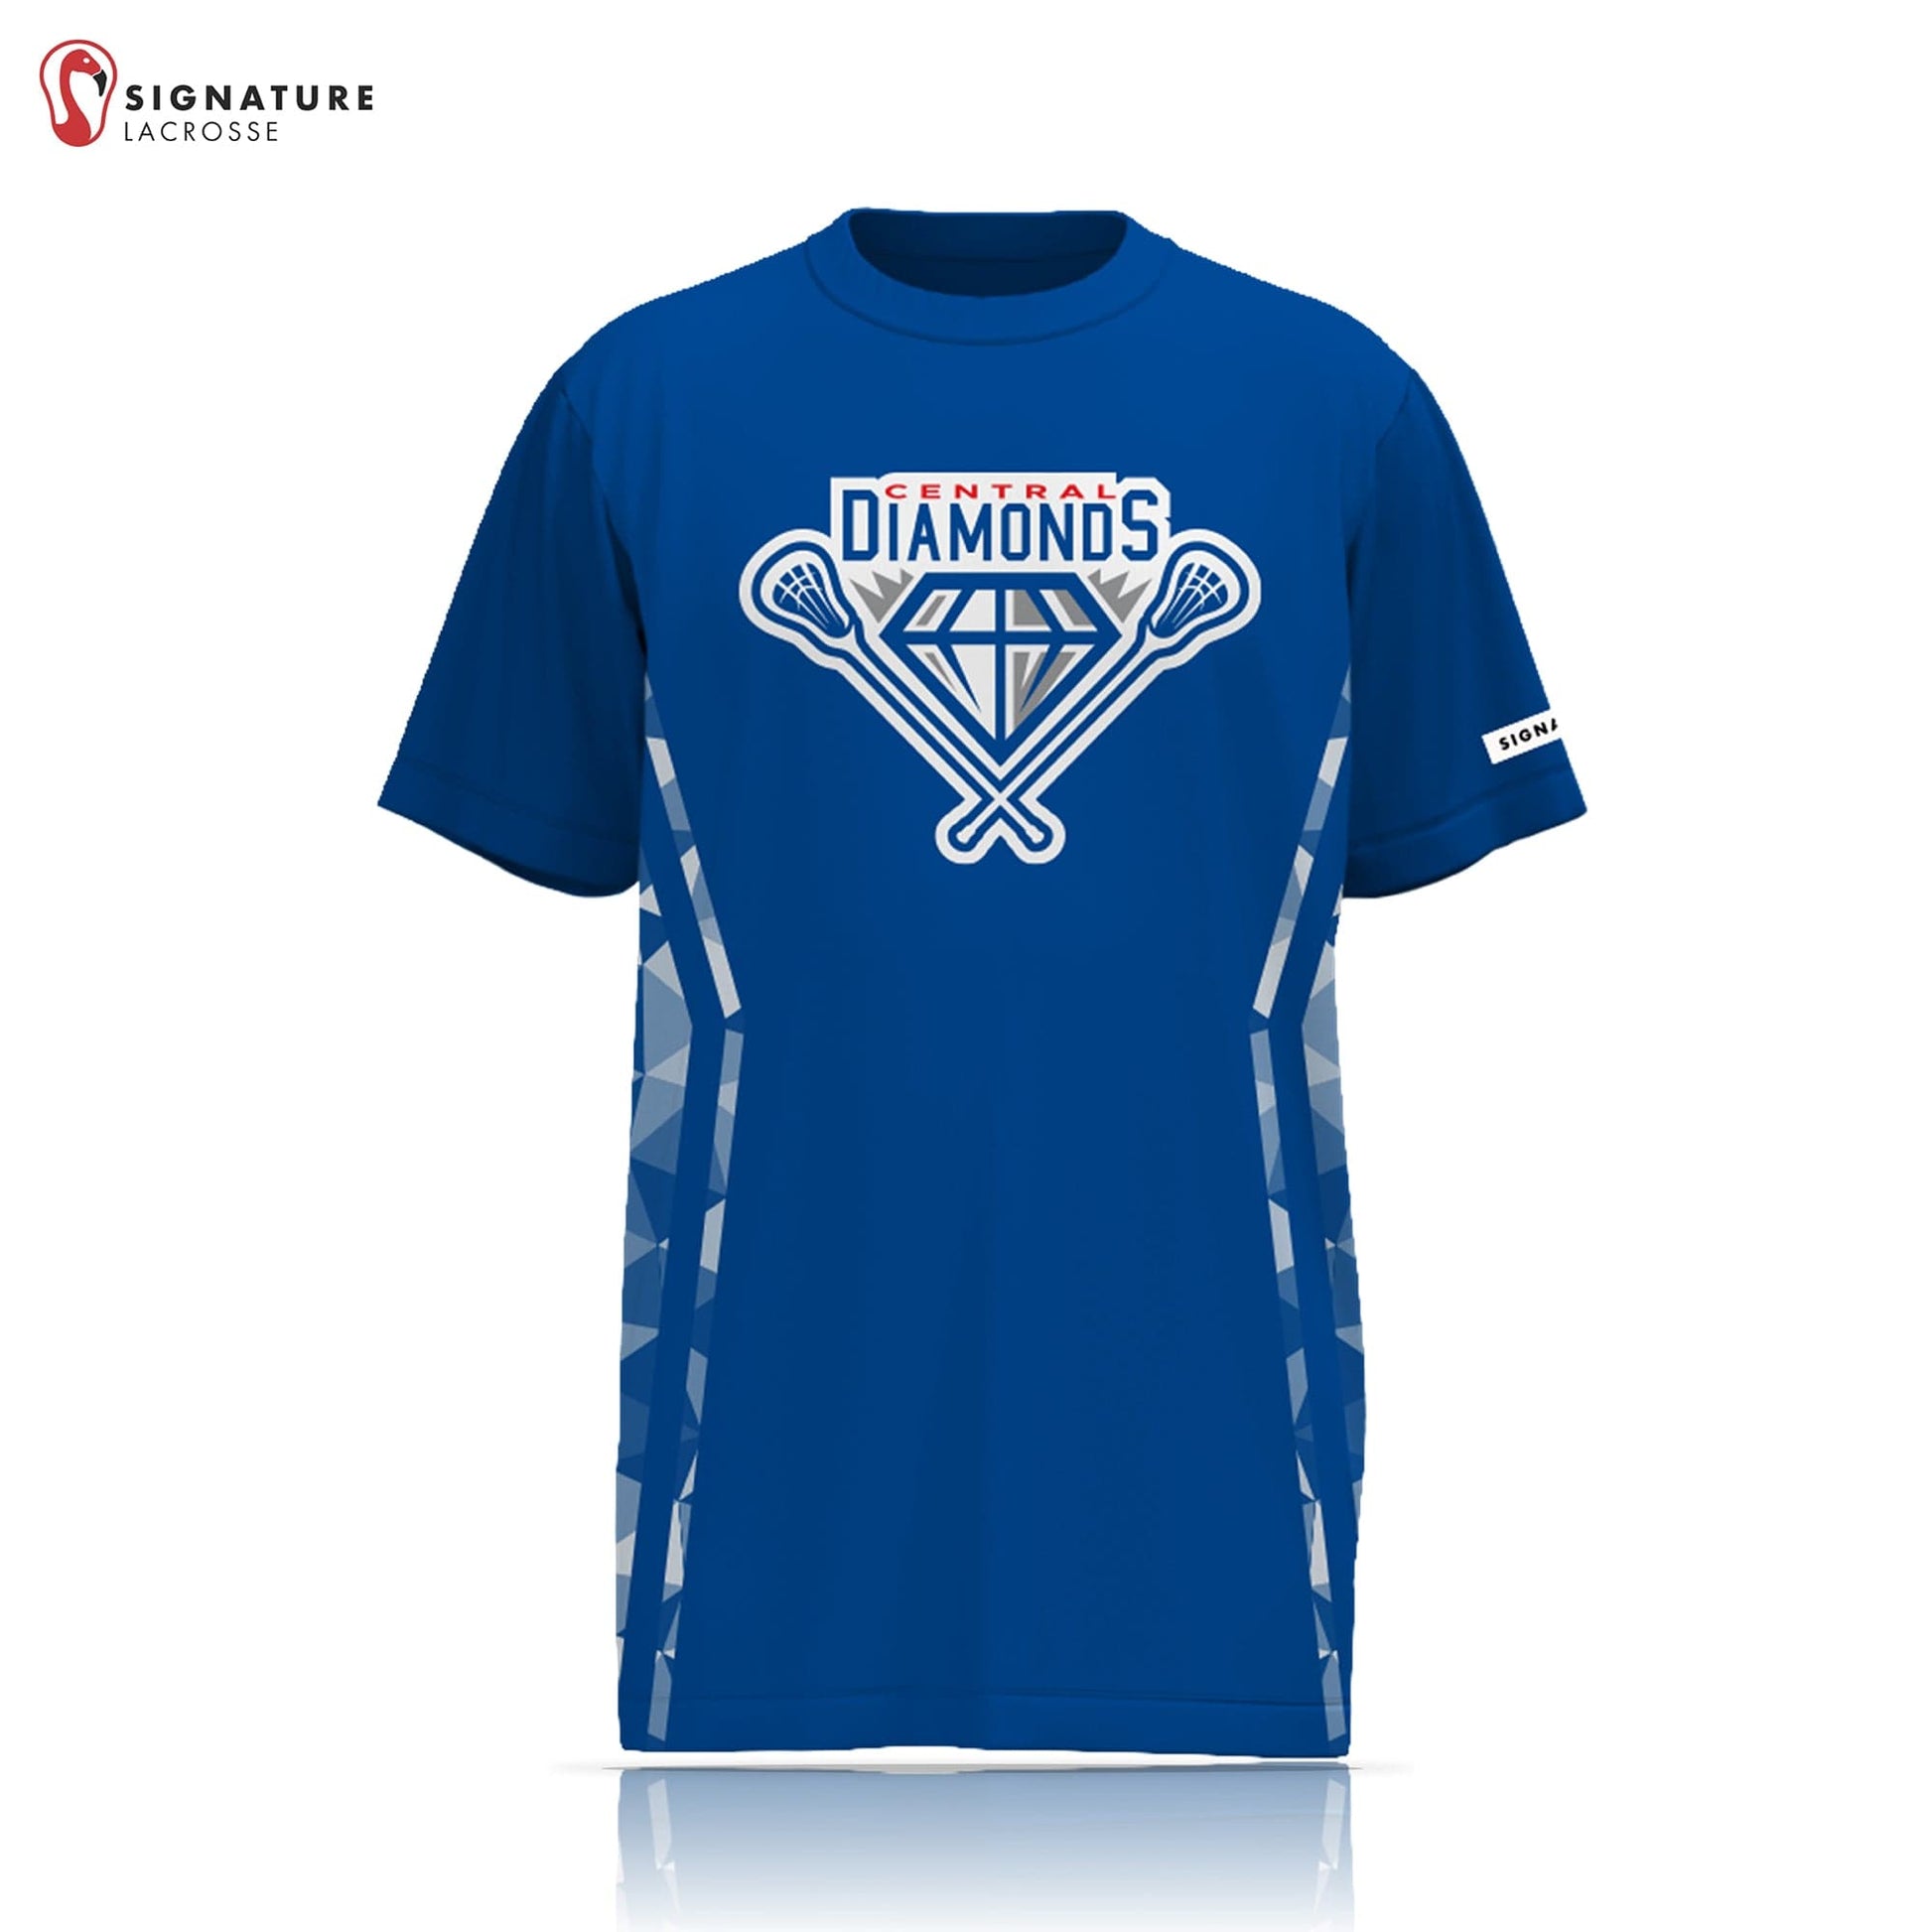 Central Diamonds Women's 3 Piece Pro Game Package Signature Lacrosse